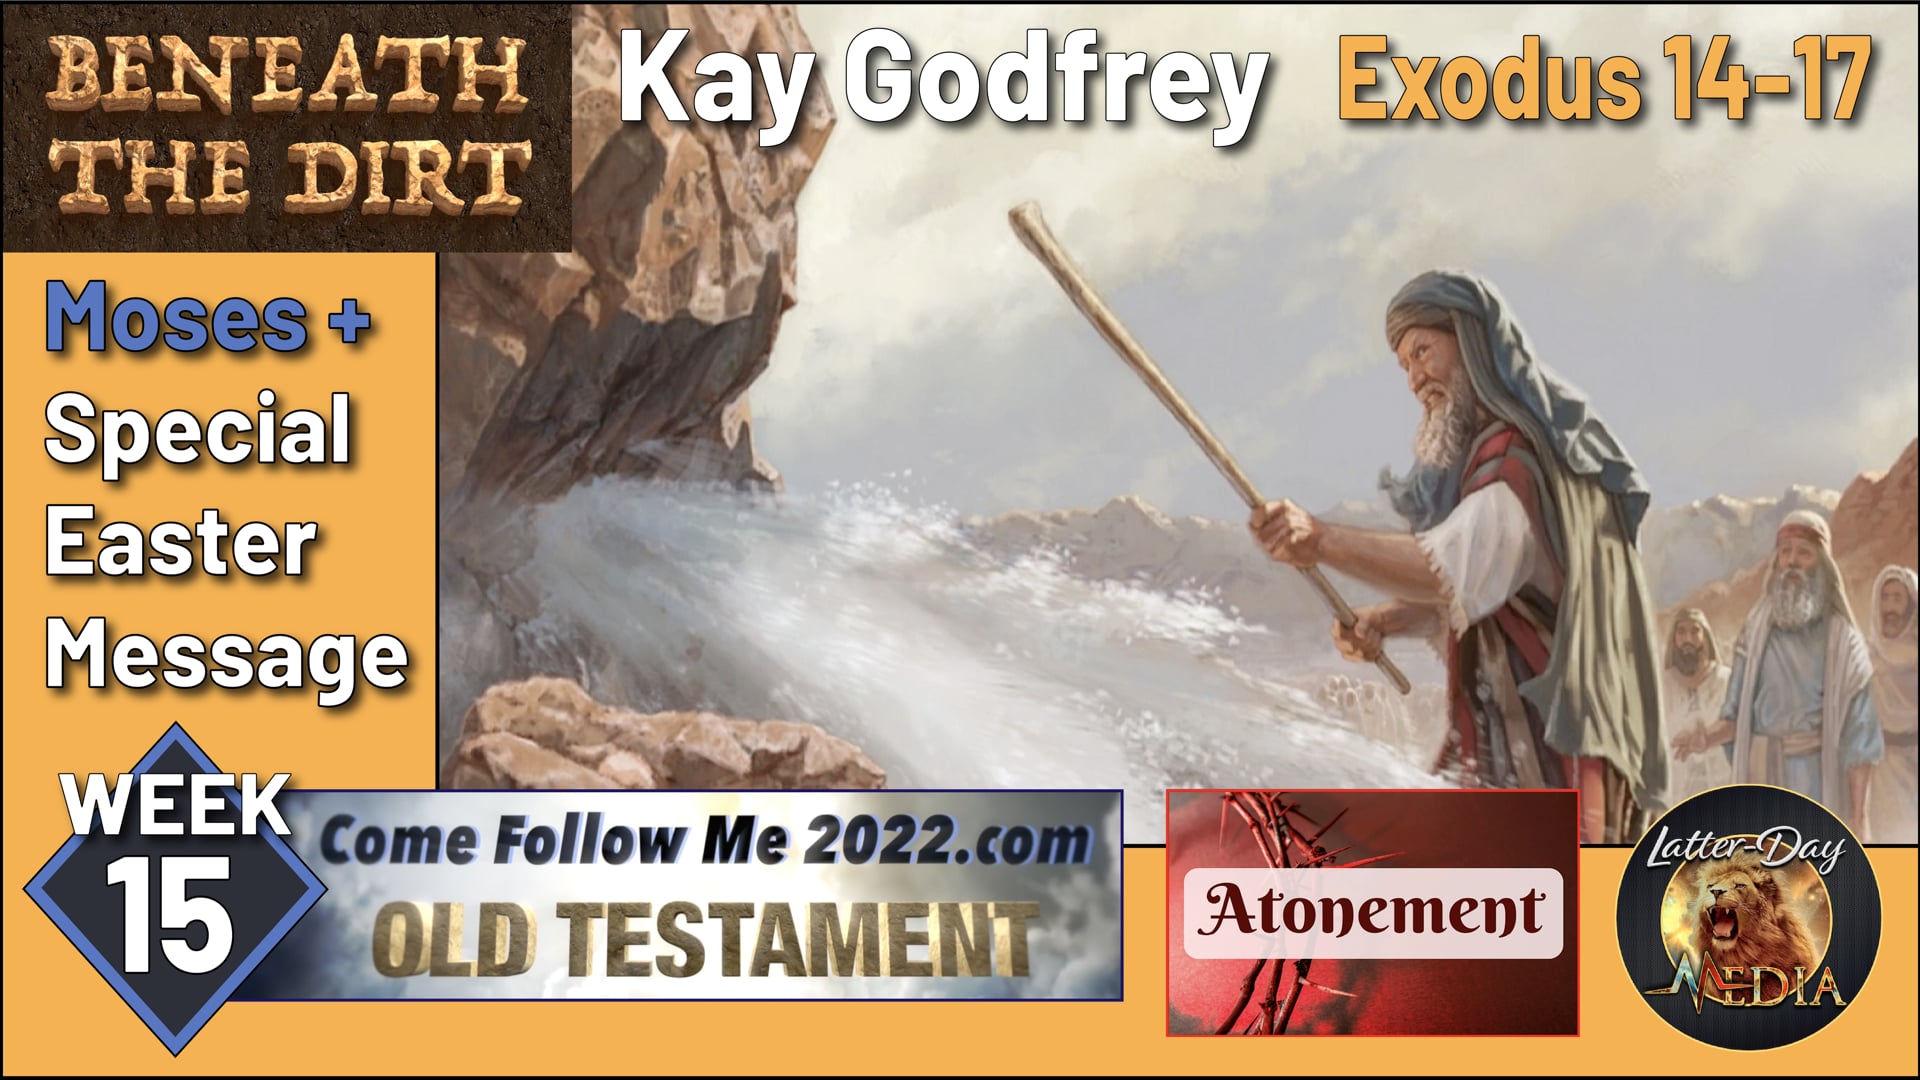 EP 15 Exodus 14-17 & Atonement "Beneath the Dirt" Come Follow Me LDS - Kay Godfrey.mp4